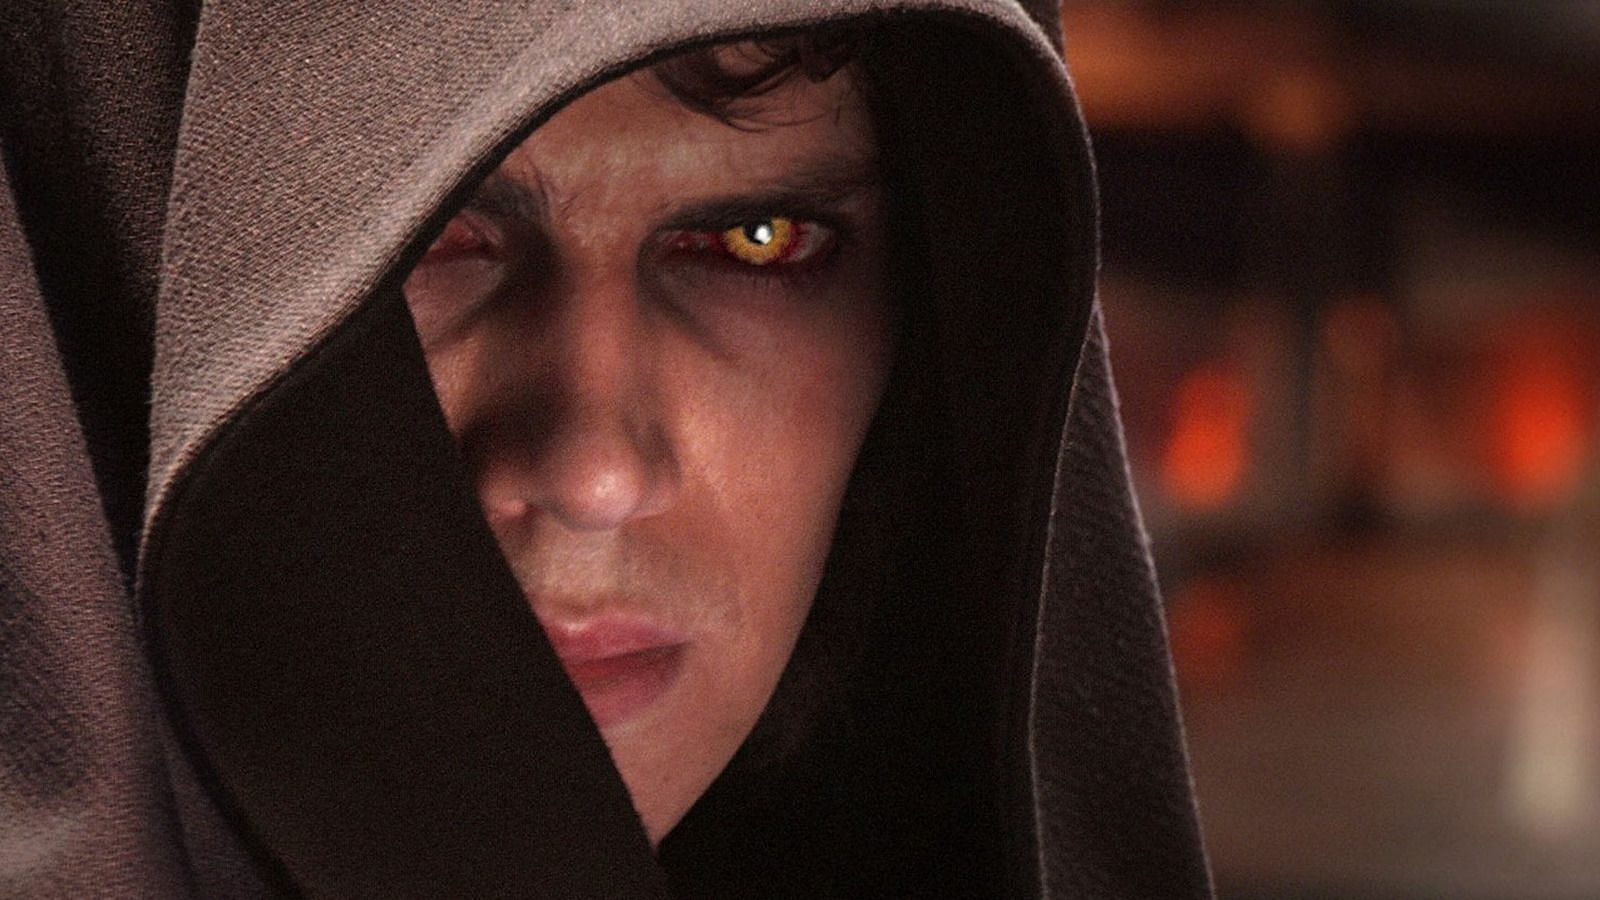 Sith Lord eyes (Image via 20th Century Fox)